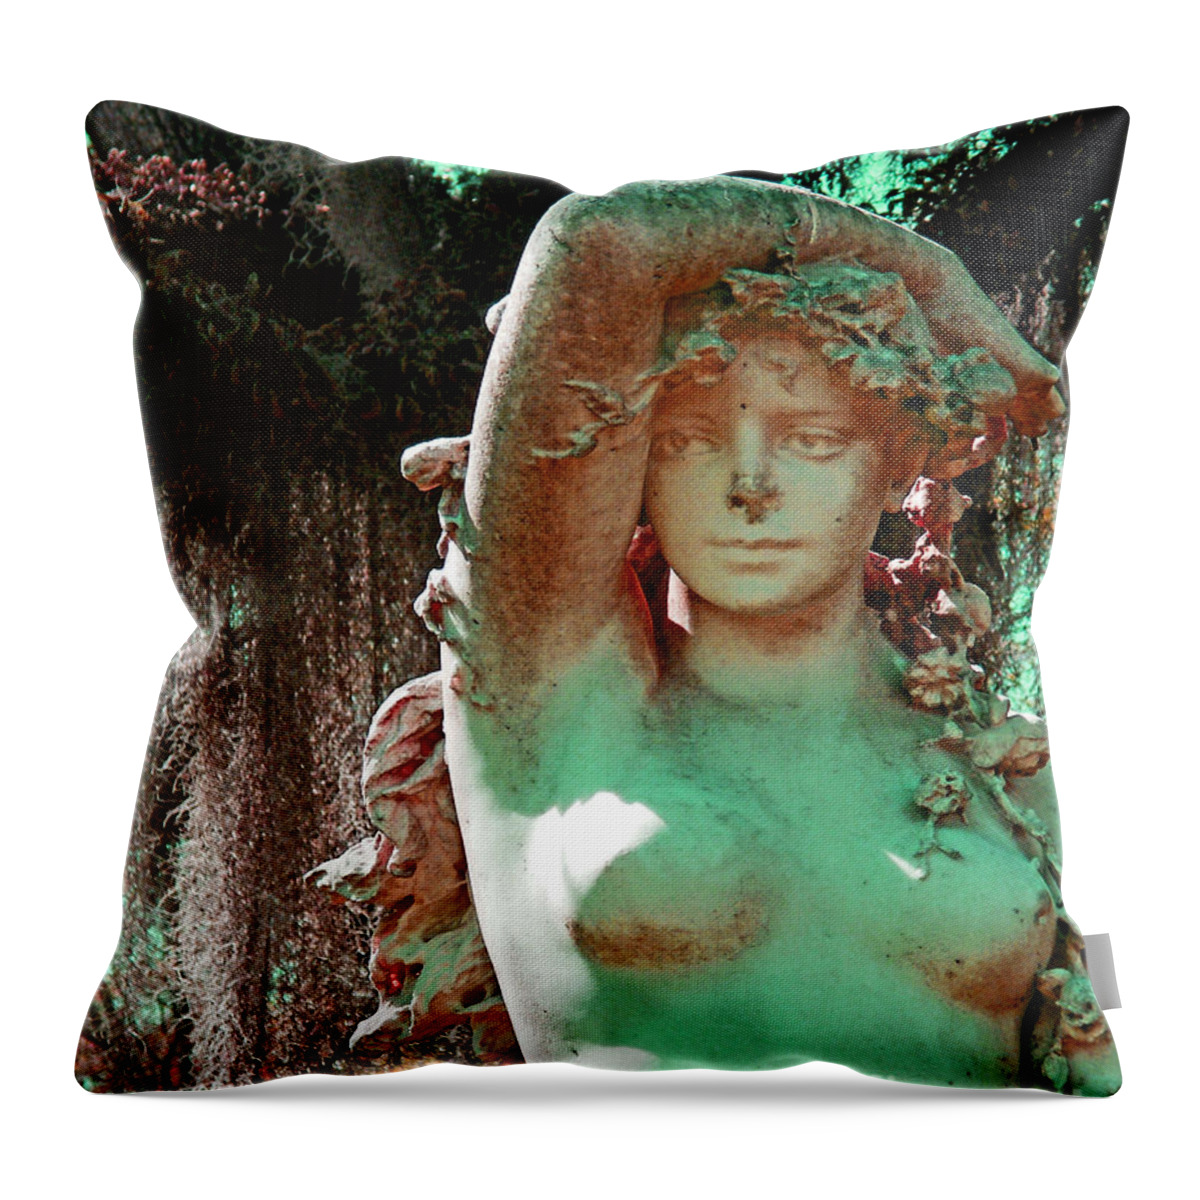 Statue Throw Pillow featuring the digital art Afton Plantation Garden Statuary by Lizi Beard-Ward